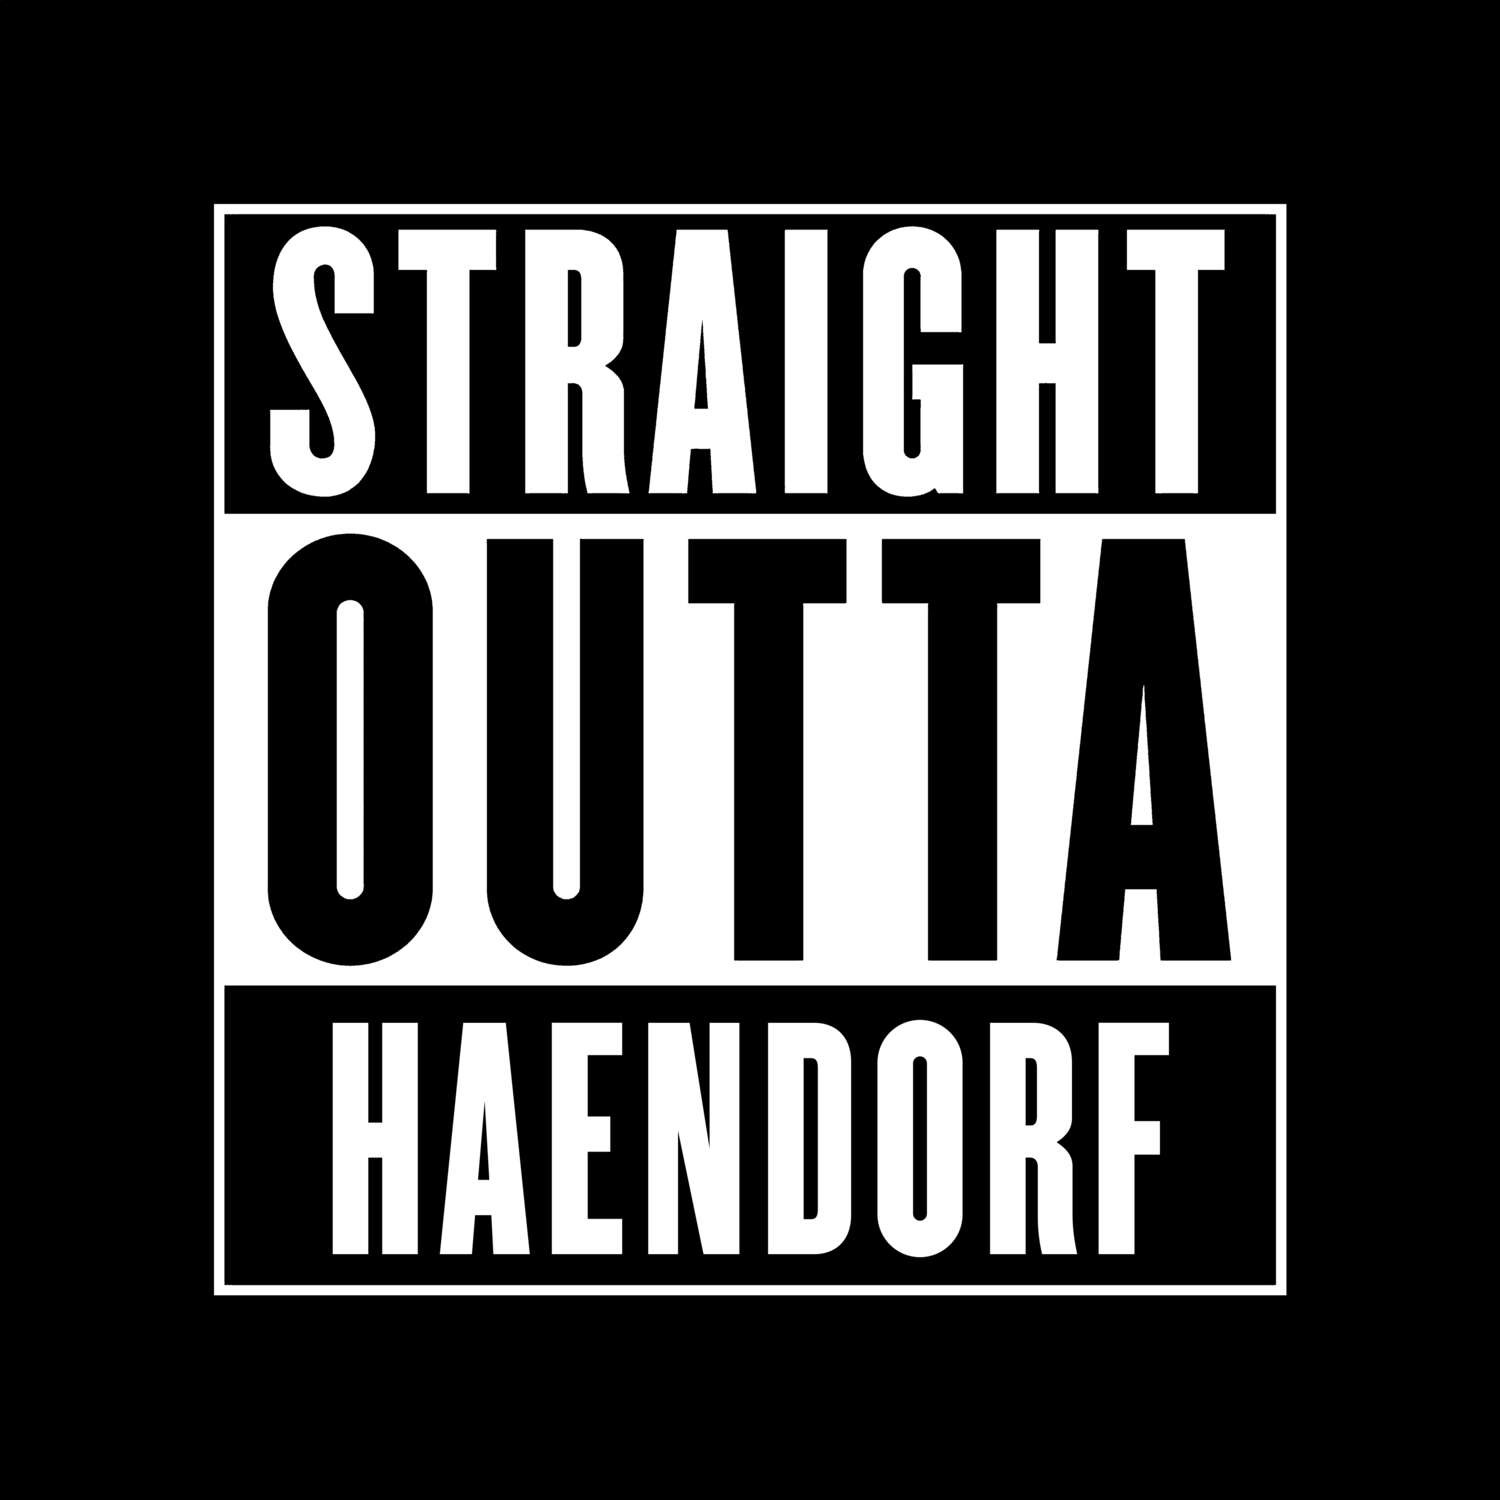 Haendorf T-Shirt »Straight Outta«